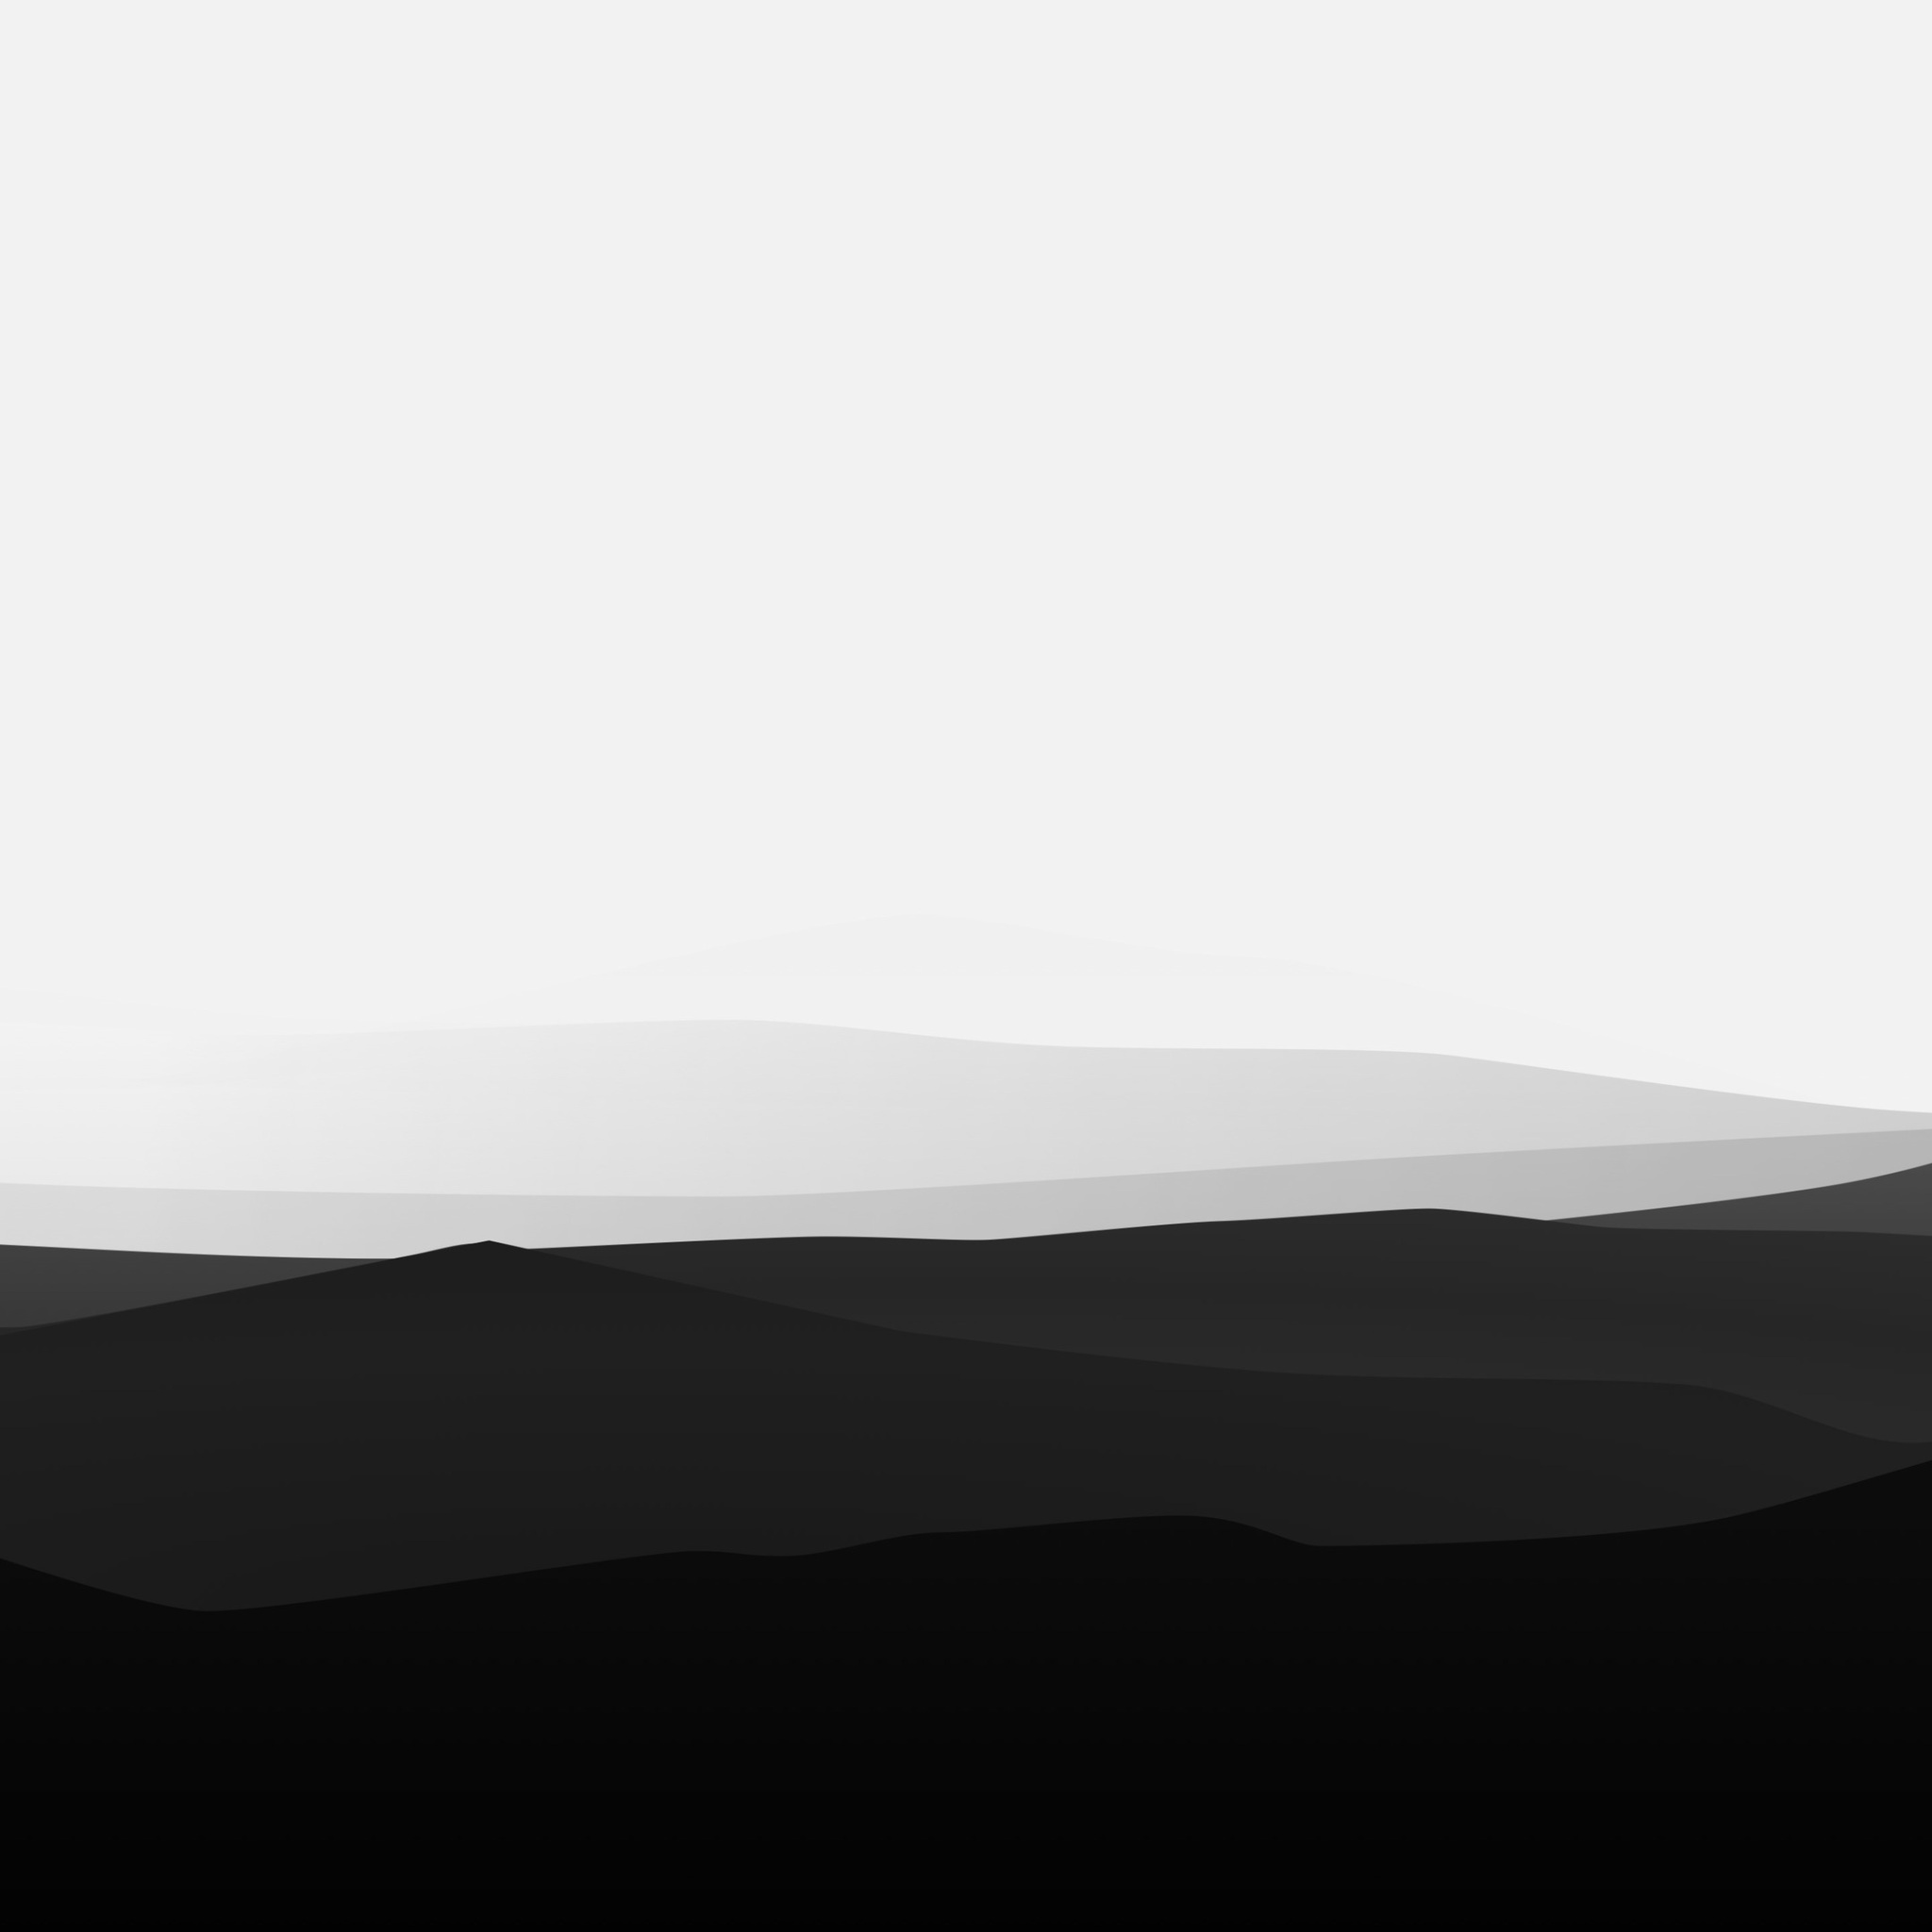 Minimalist Mountains Black And White 4k Wallpaper 4K